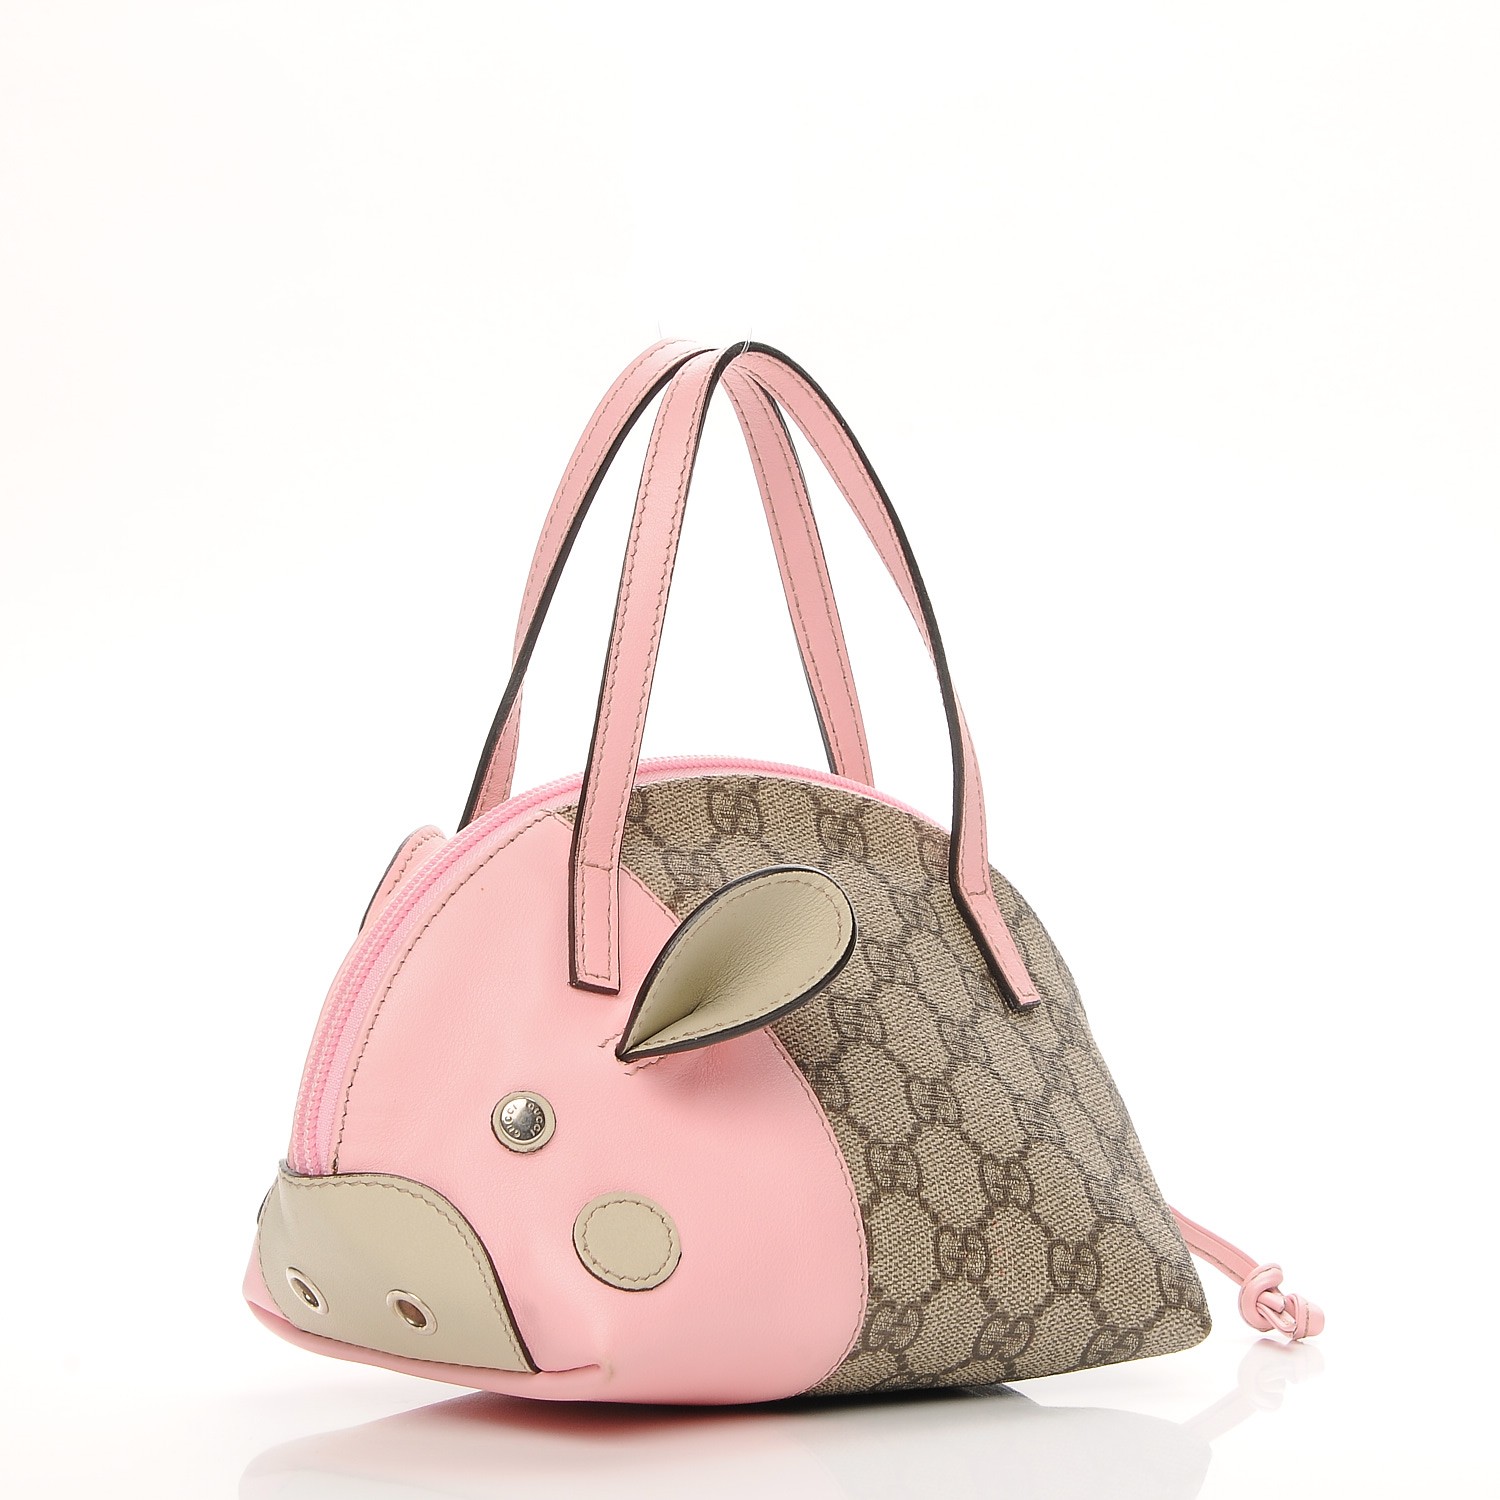 gucci pig purse, OFF 71%,www 